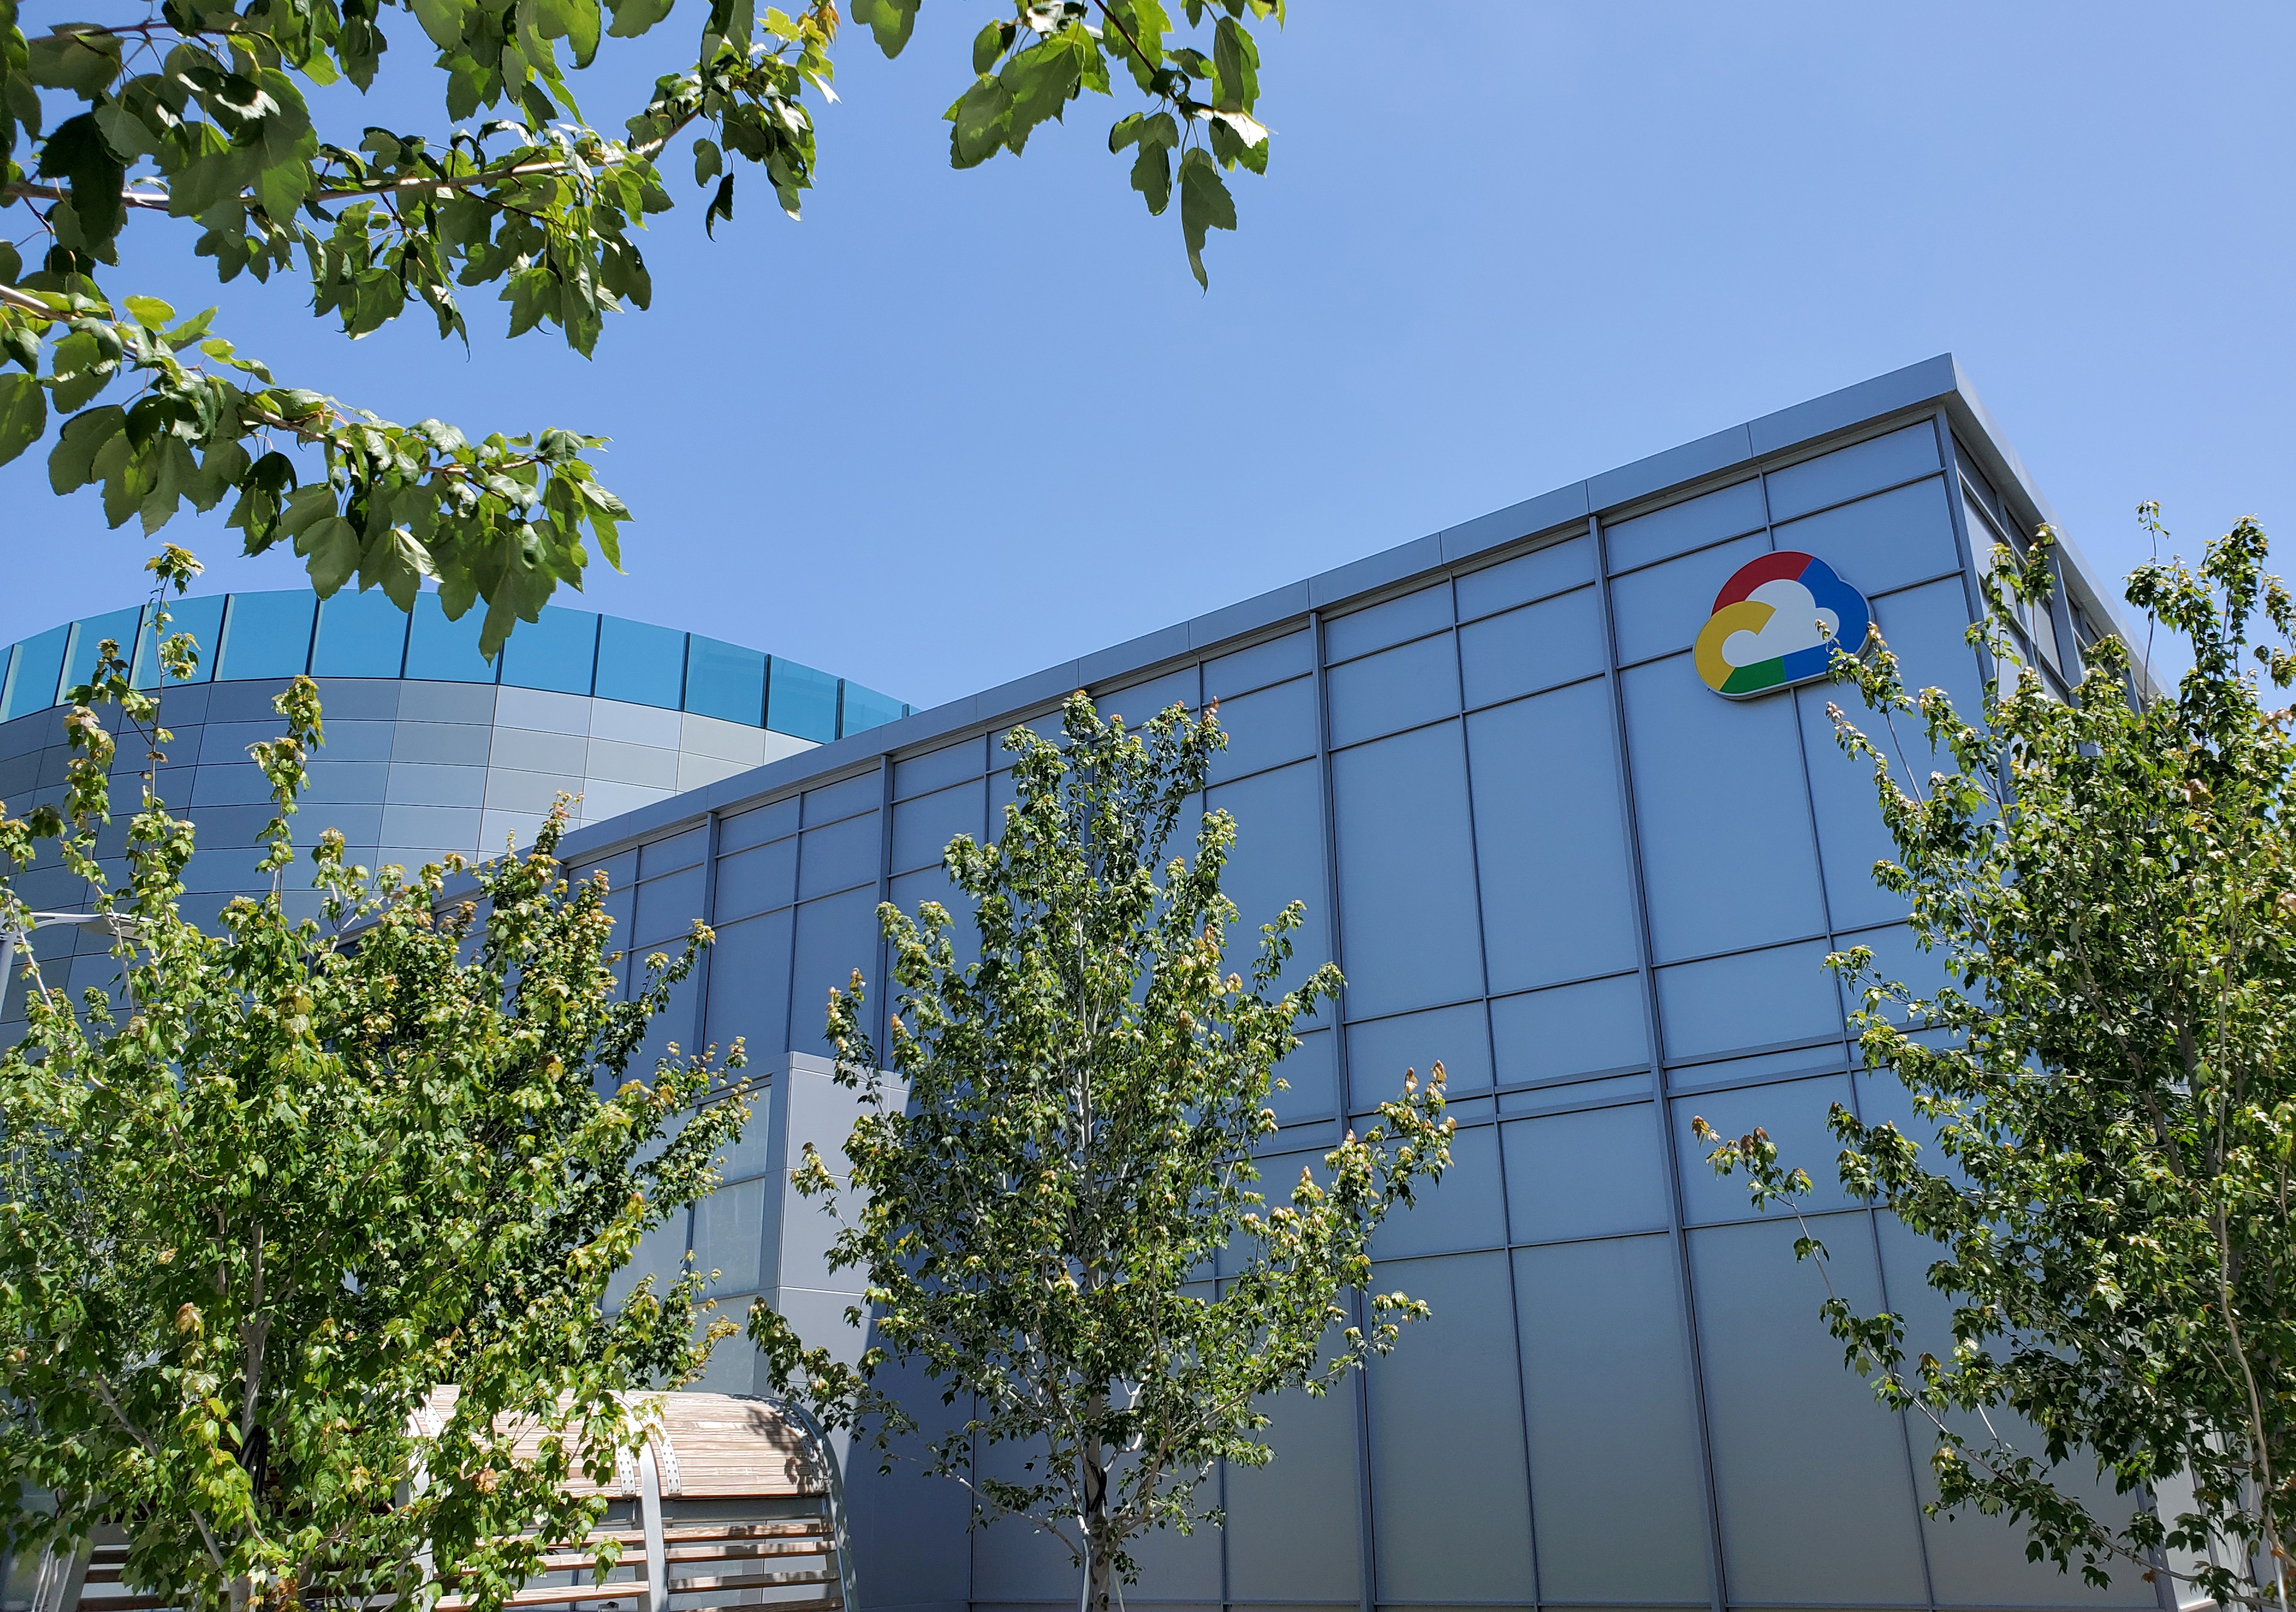 A Google Cloud logo outside of the Google Cloud computing unit's headquarters in Sunnyvale, California